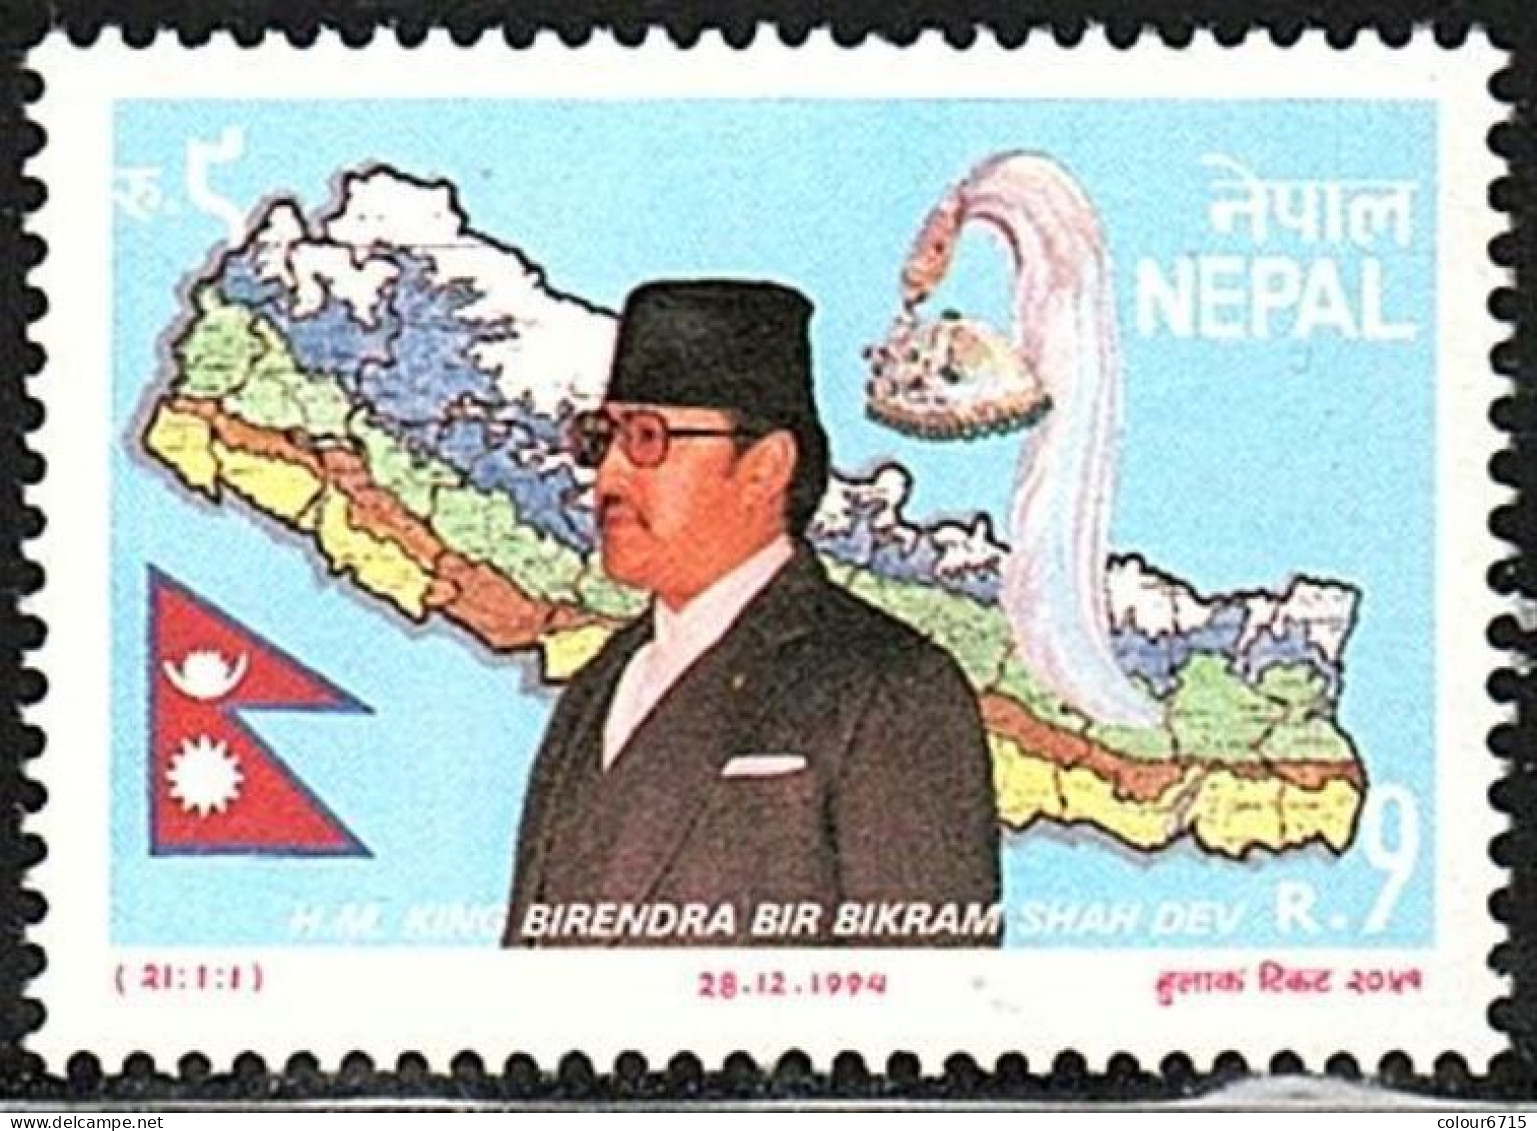 Nepal 1994 The 49th Anniversary Of The Birth Of King Birendra Stamp 1v MNH - Népal